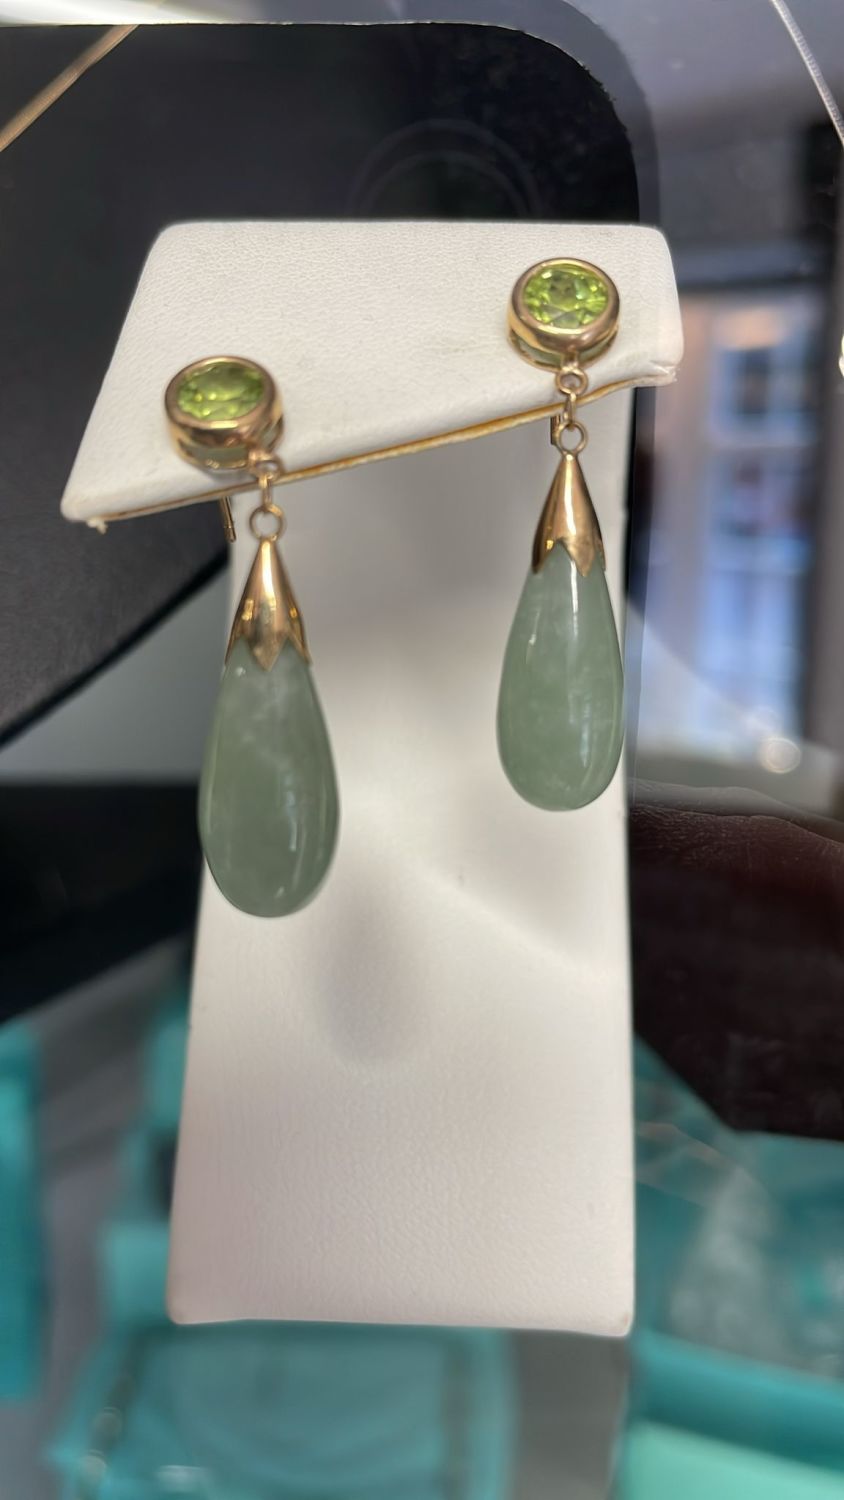 Vintage 9ct drop earrings with jade and peridot